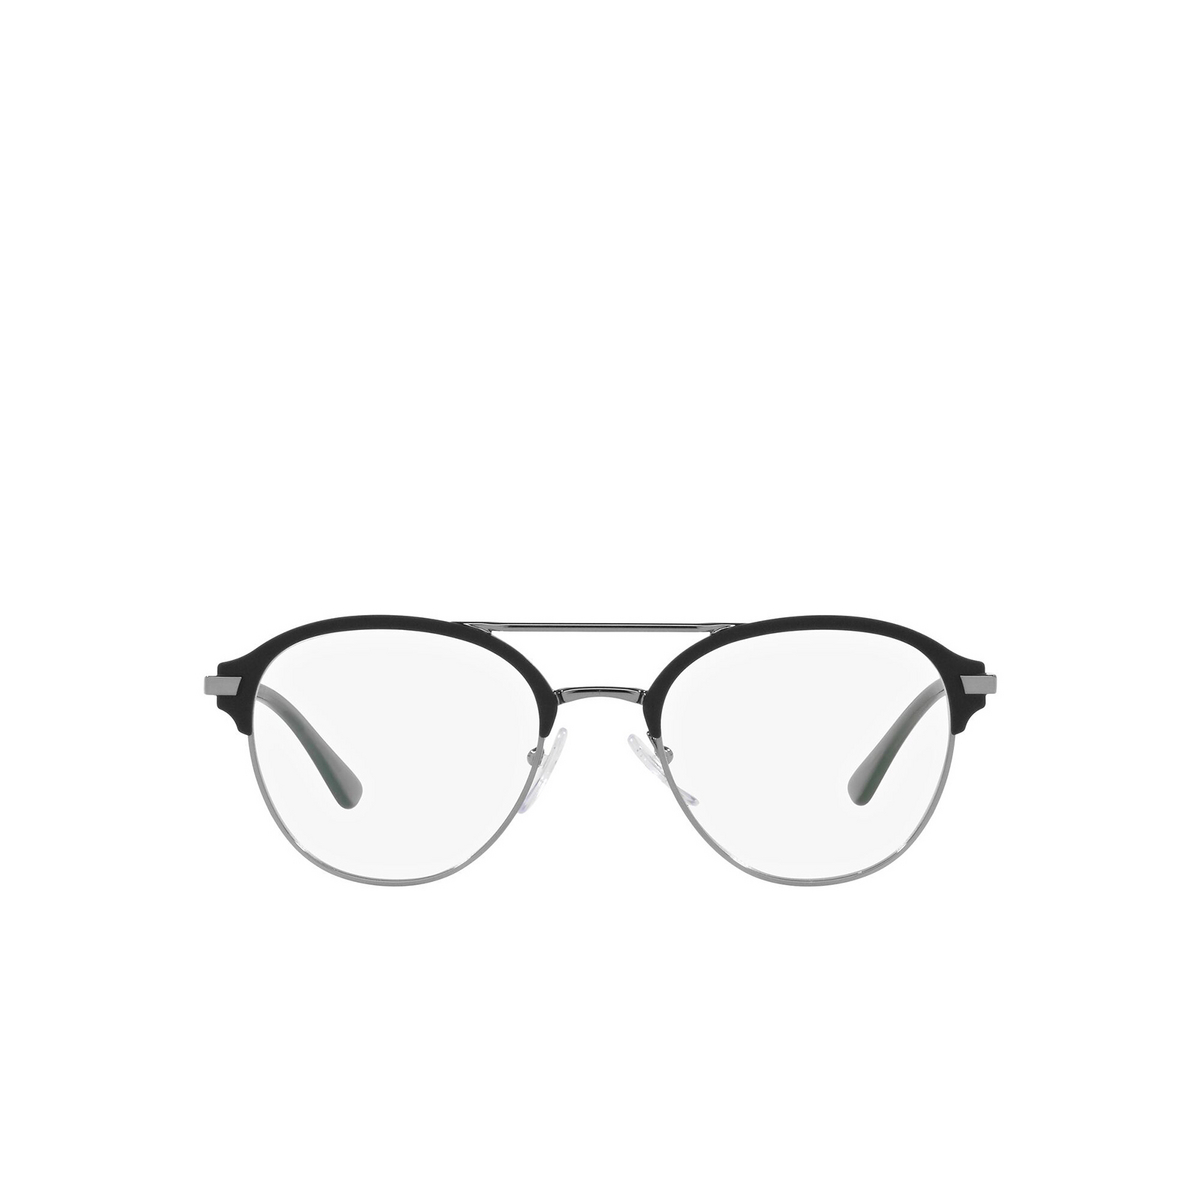 Prada® Aviator Eyeglasses: PR 61WV color Matte Black / Gunmetal 02G1O1 - front view.